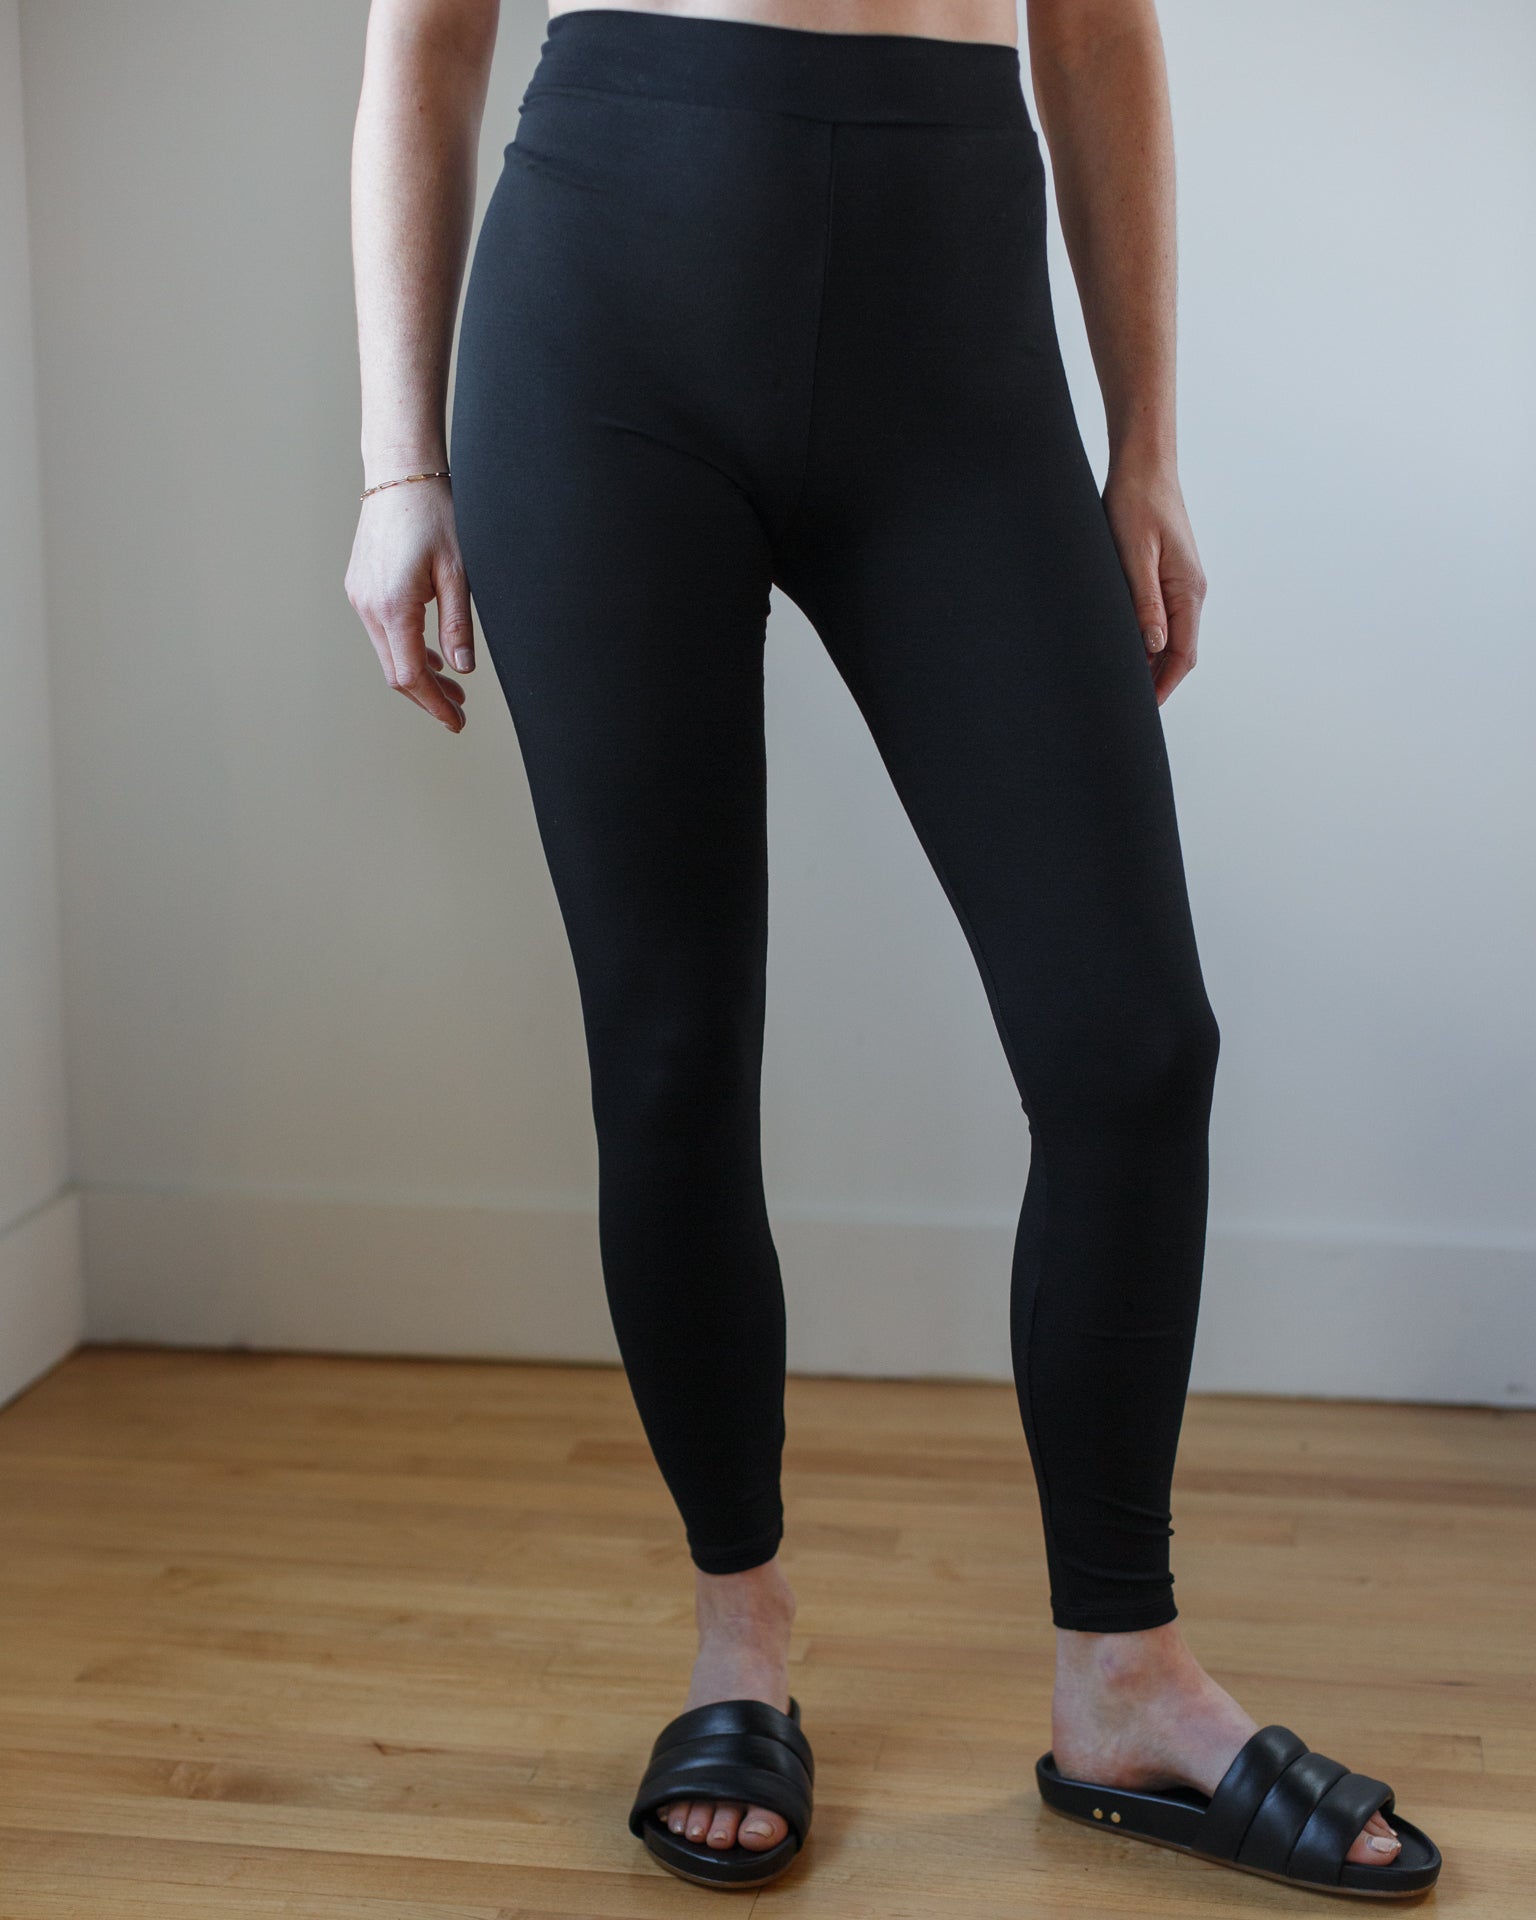 Black Leggings-lulu Same Comfort Fabric Yoga Pants-workout Bottoms-women's  High Waisted Pants 